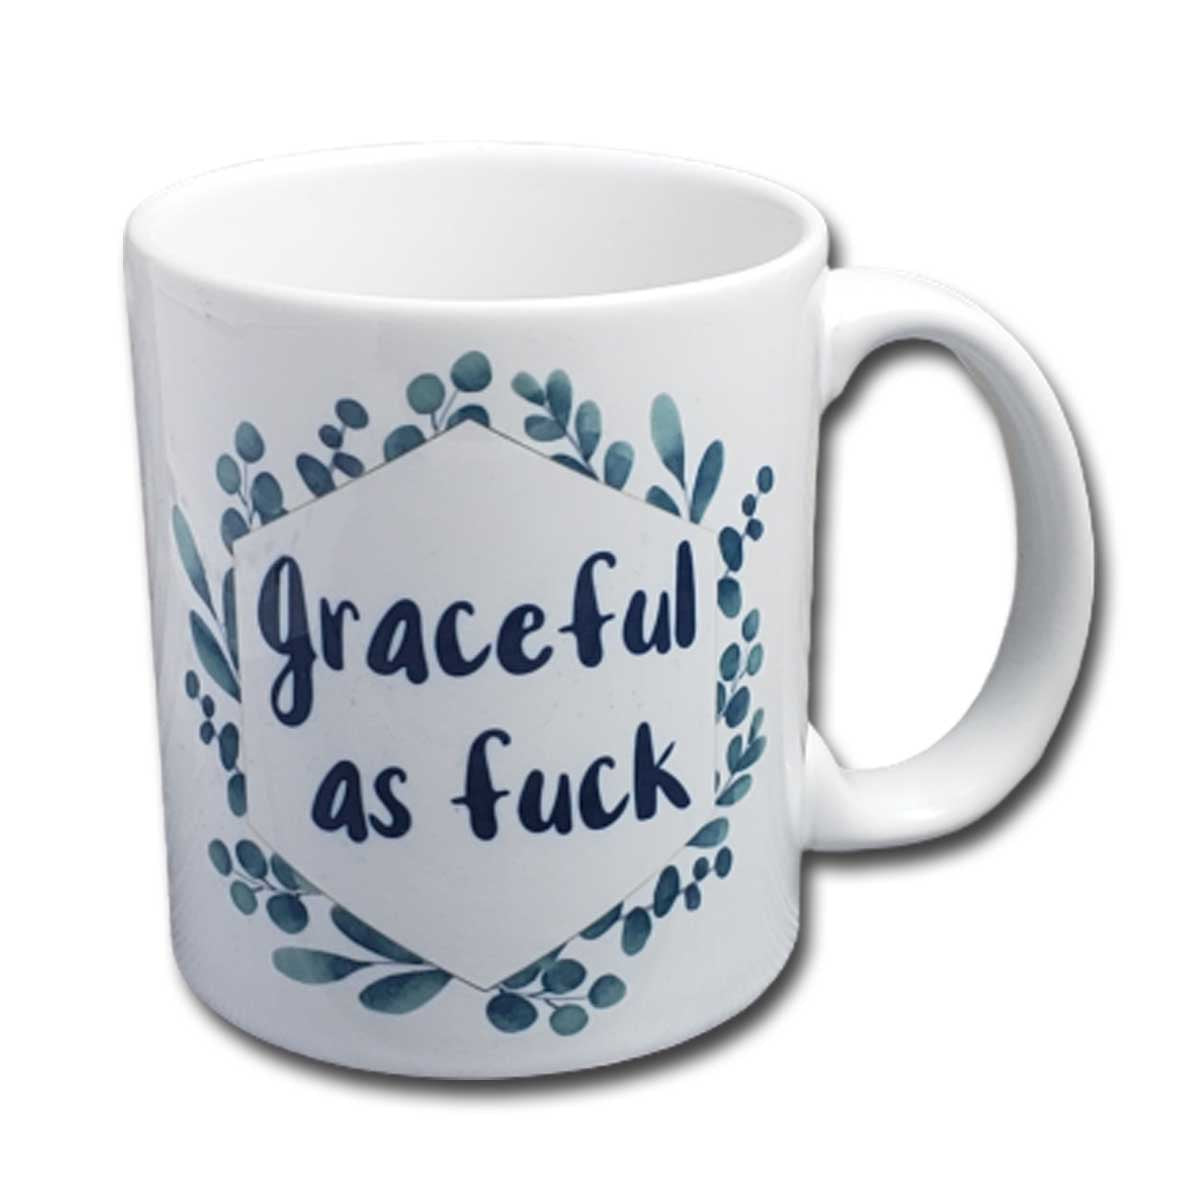 Graceful as Fuck Mug NASFW